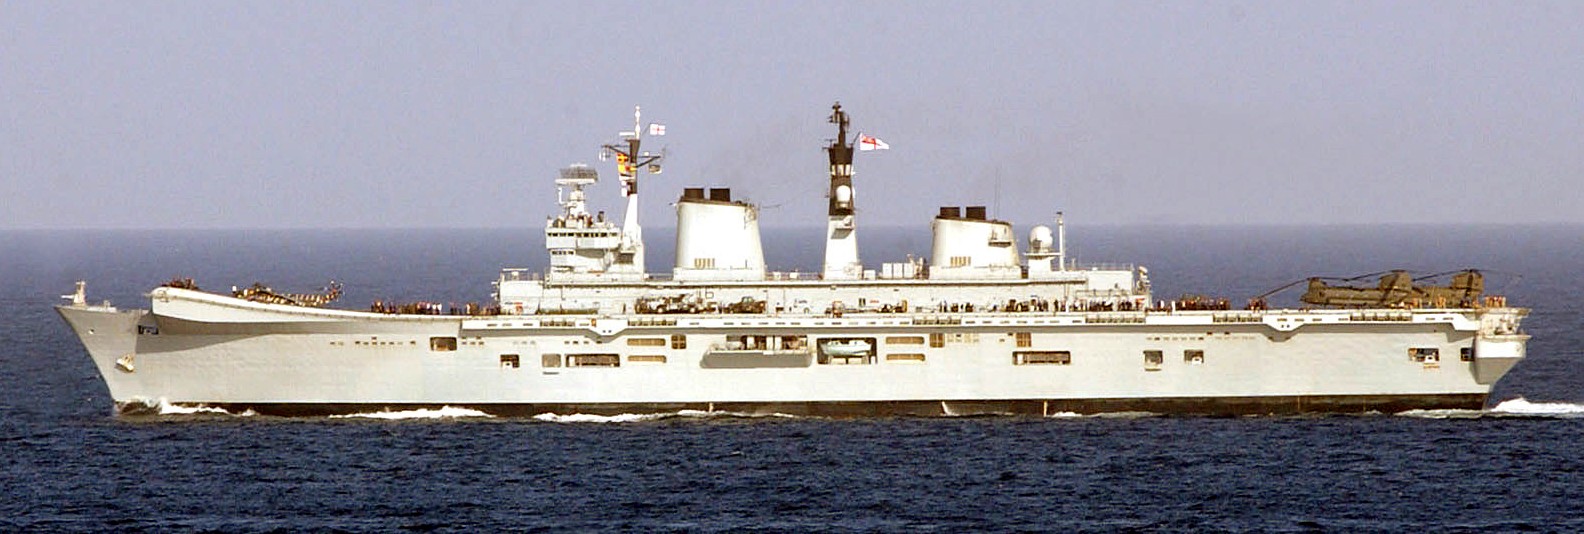 r06 hms illustrious invincible class aircraft carrier royal navy 46